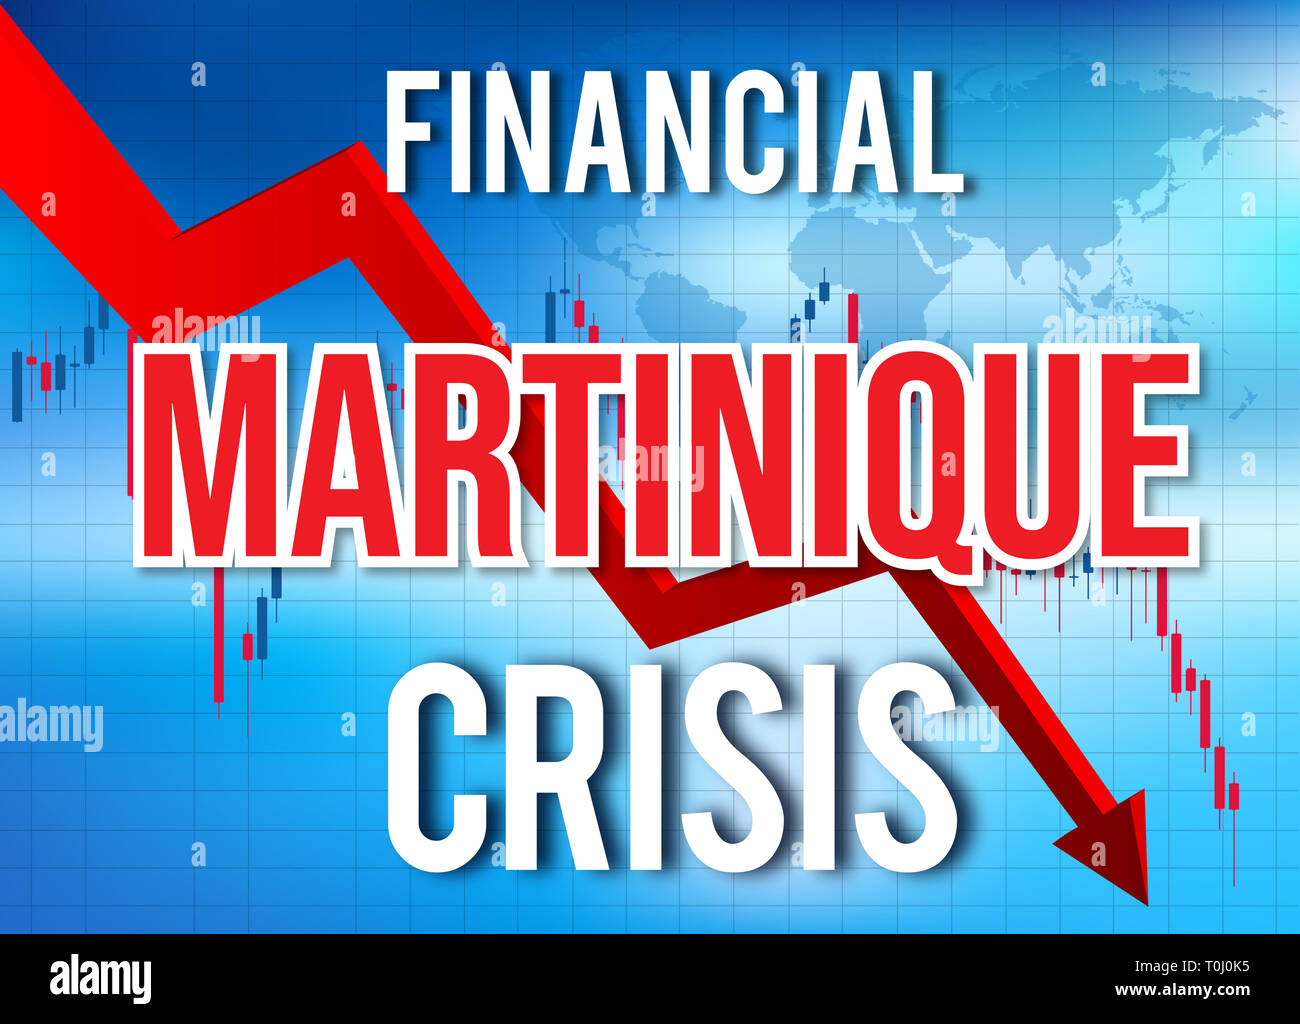 Martinique Financial Crisis Economic Collapse Market Crash Global Meltdown Illustration. Stock Photo